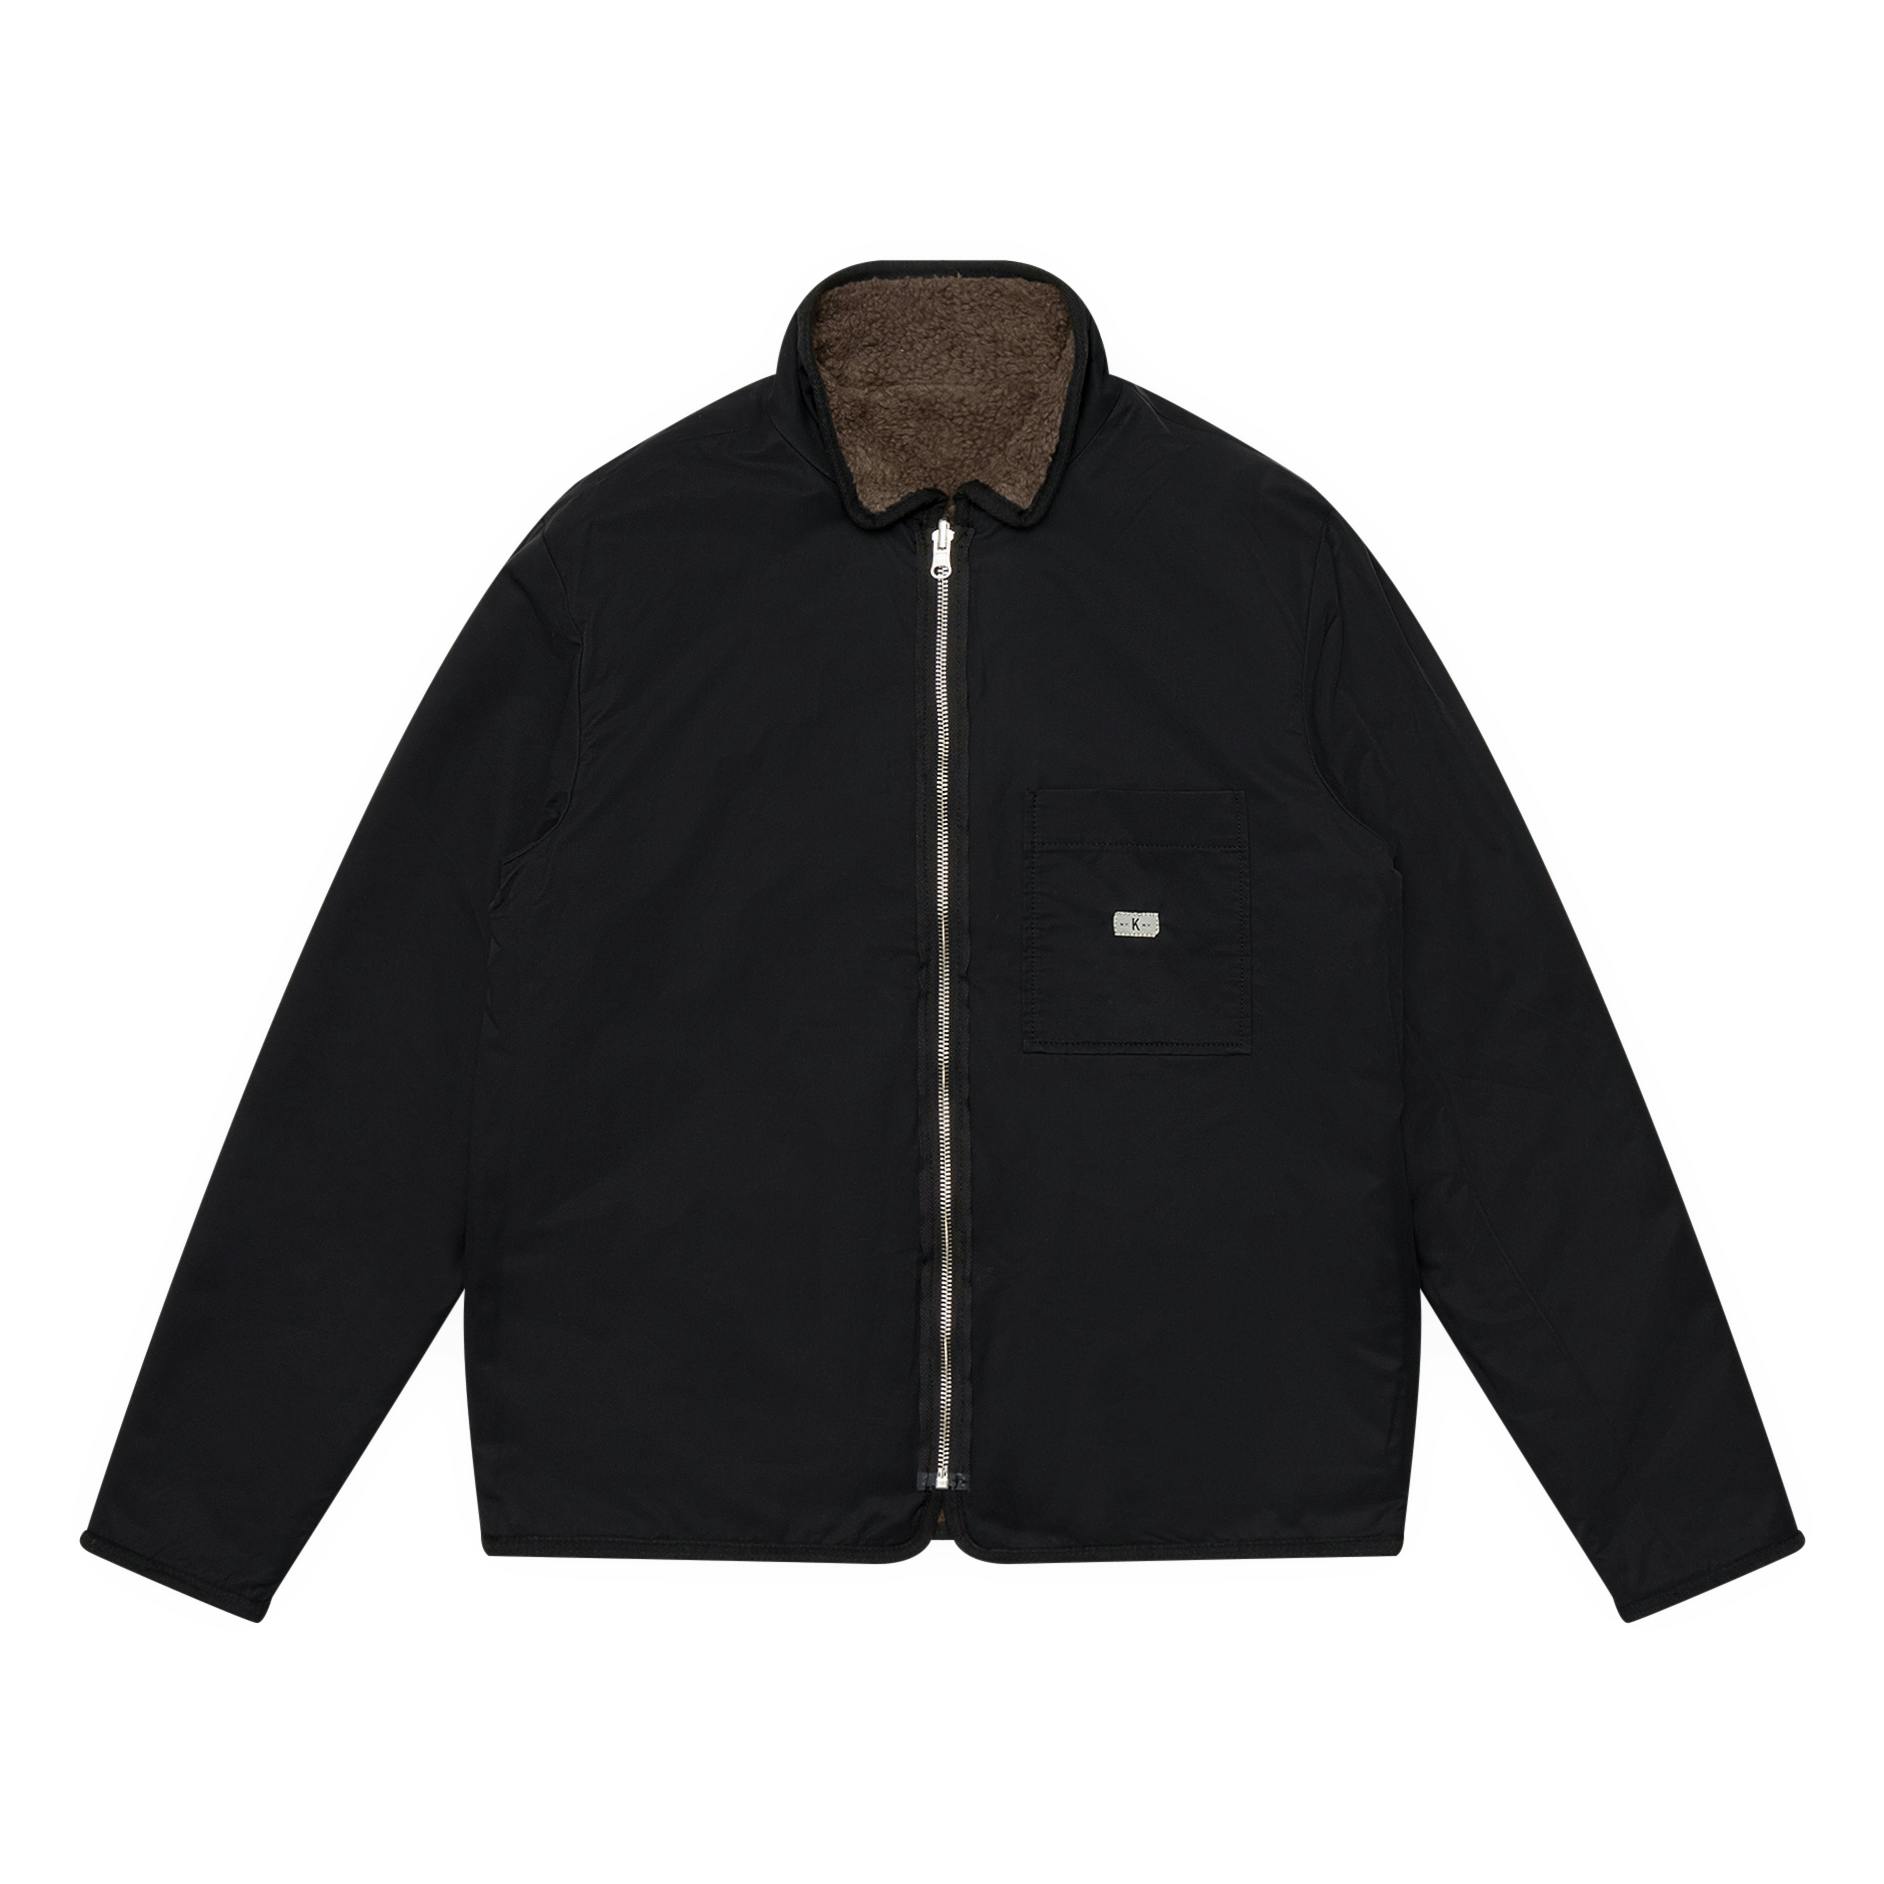 Knickerbocker Reversible Zip Pile Jacket